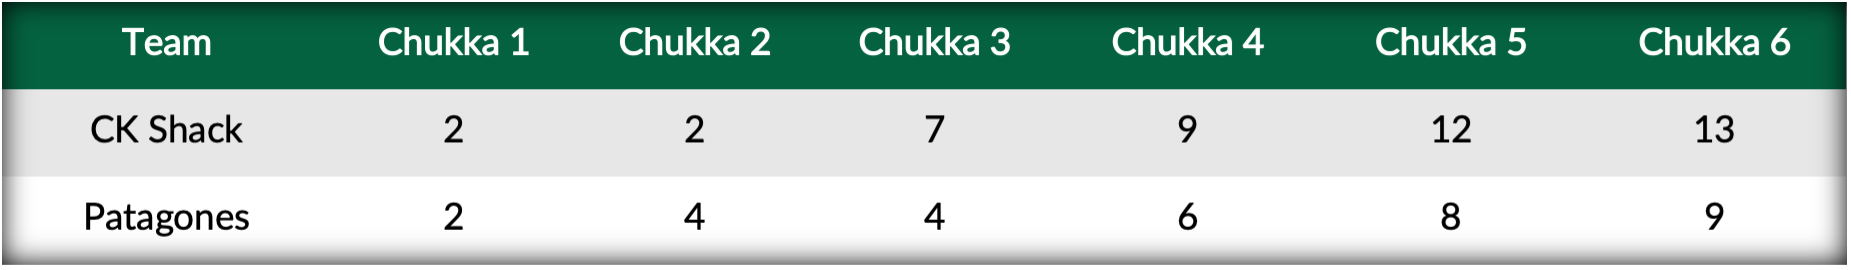 CK Shack vs Patagones- Score Table